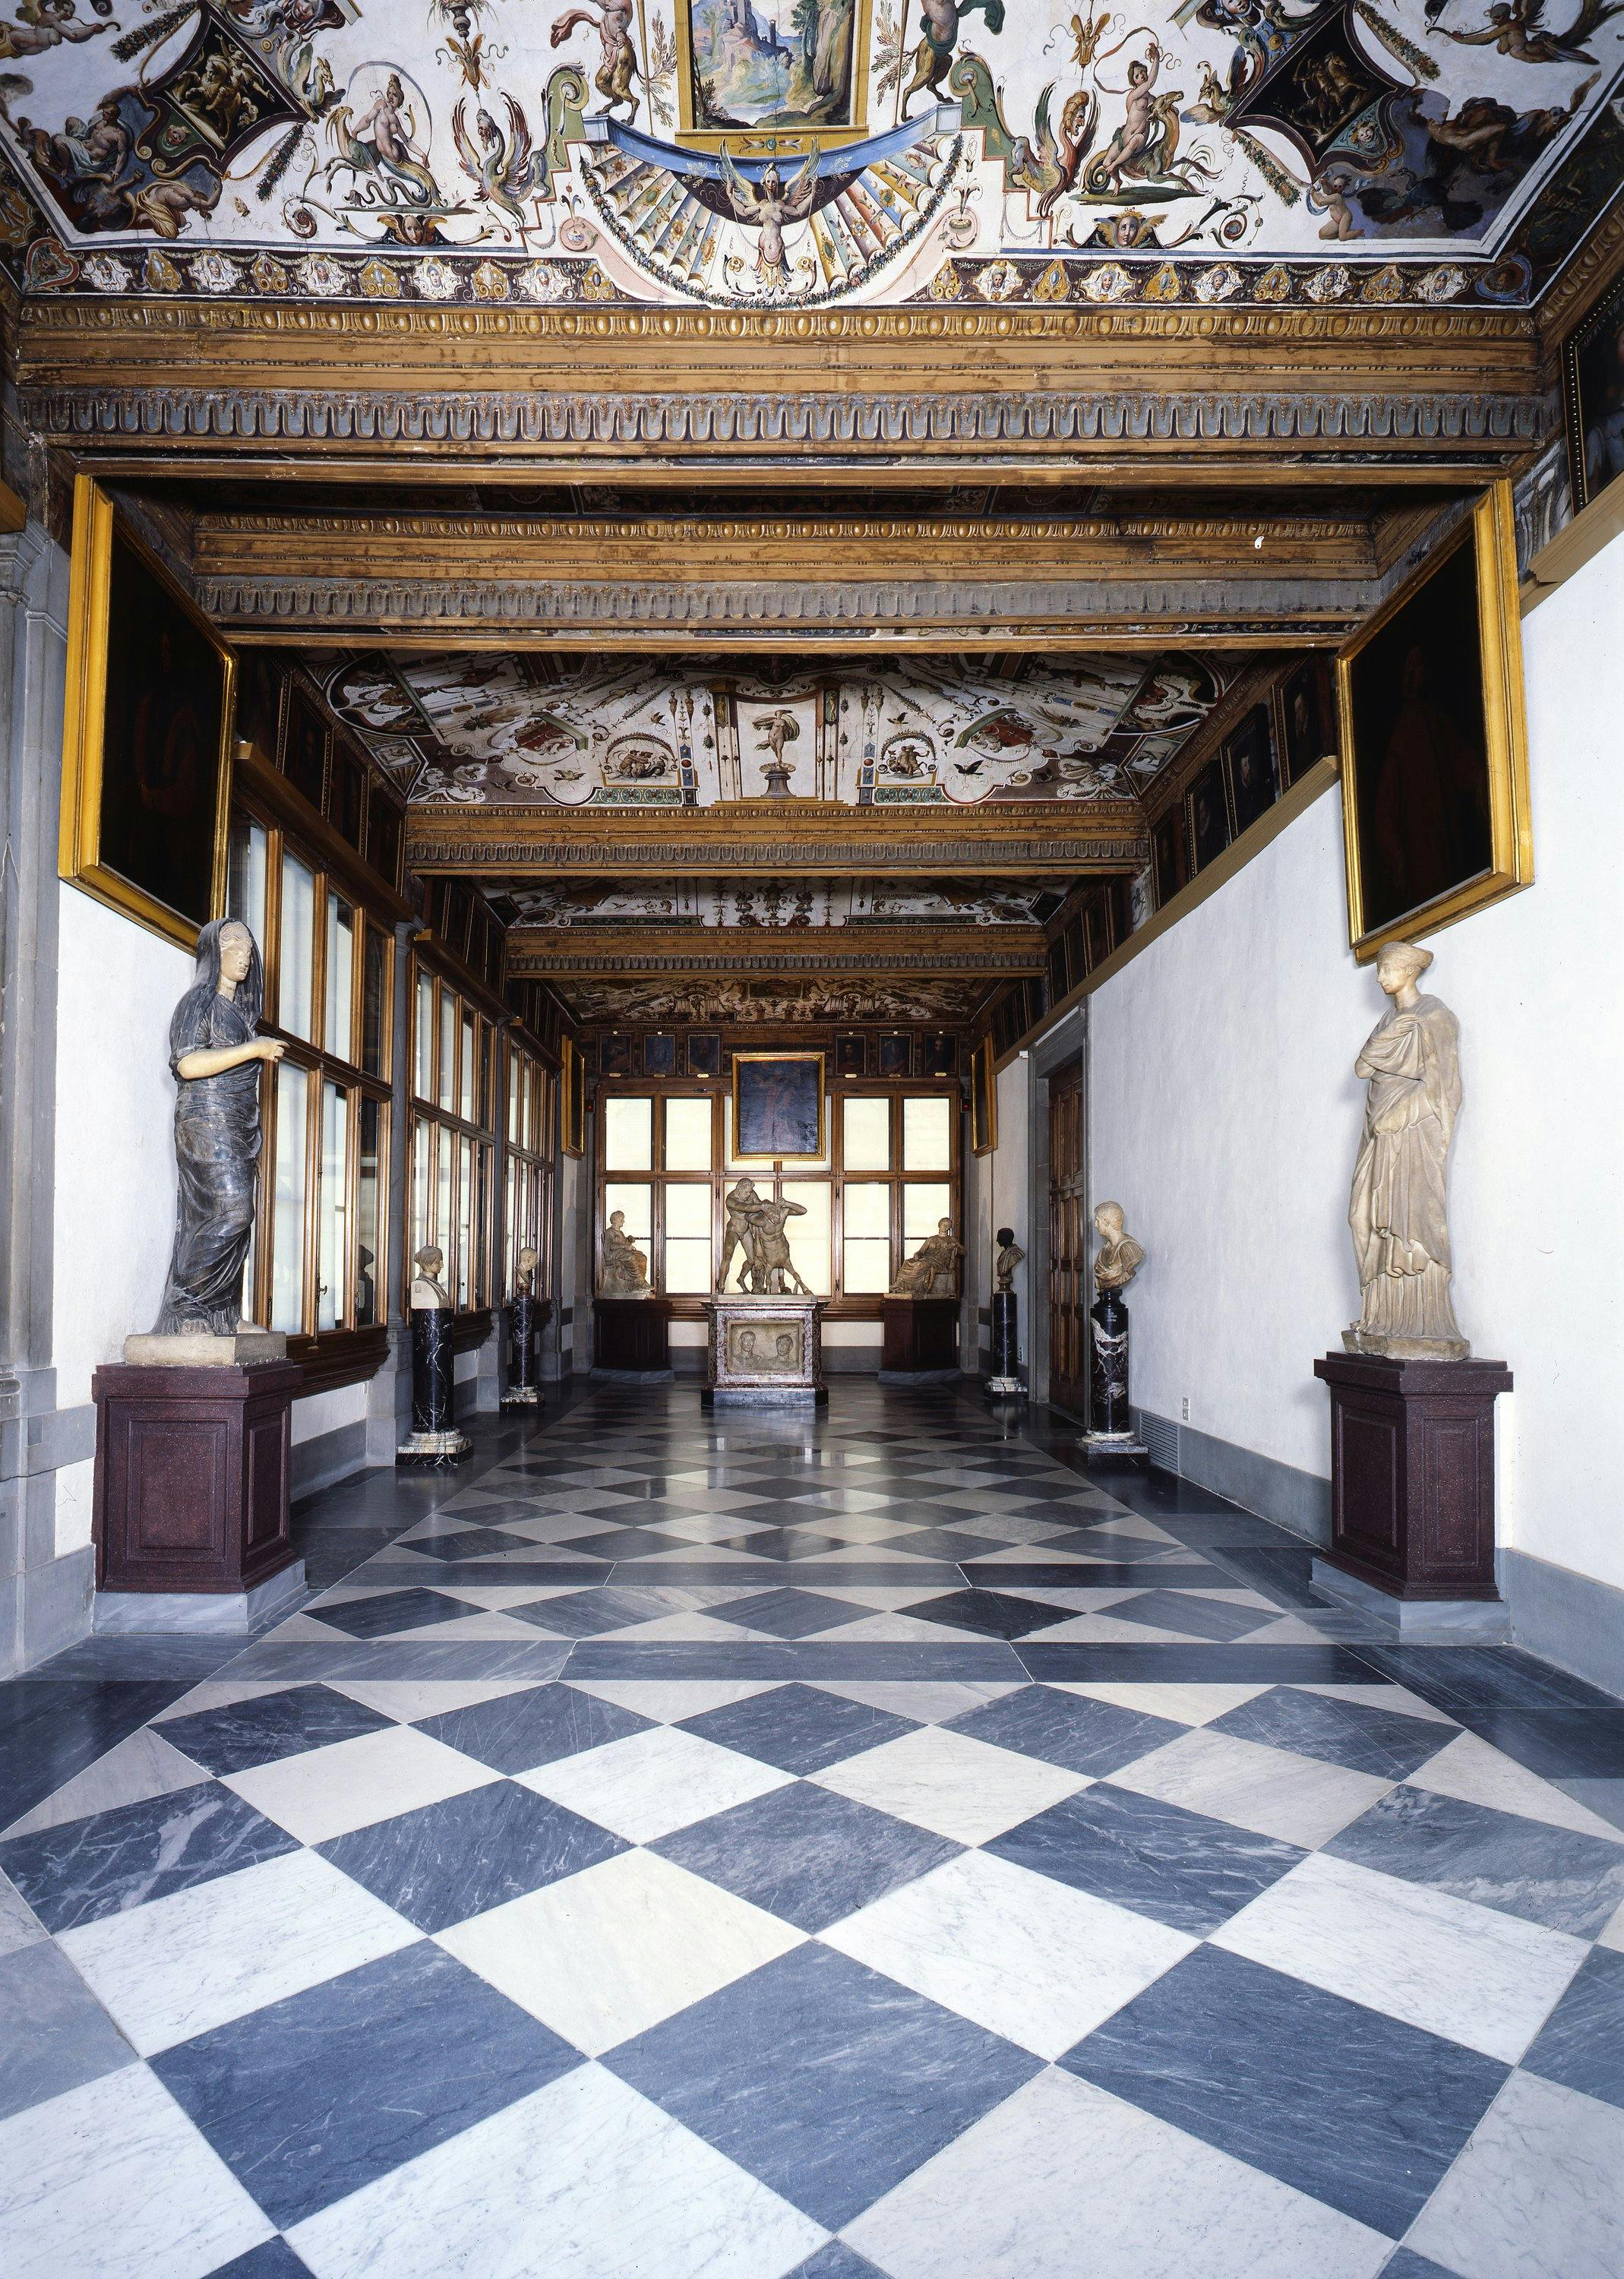 The Gallery Corridors